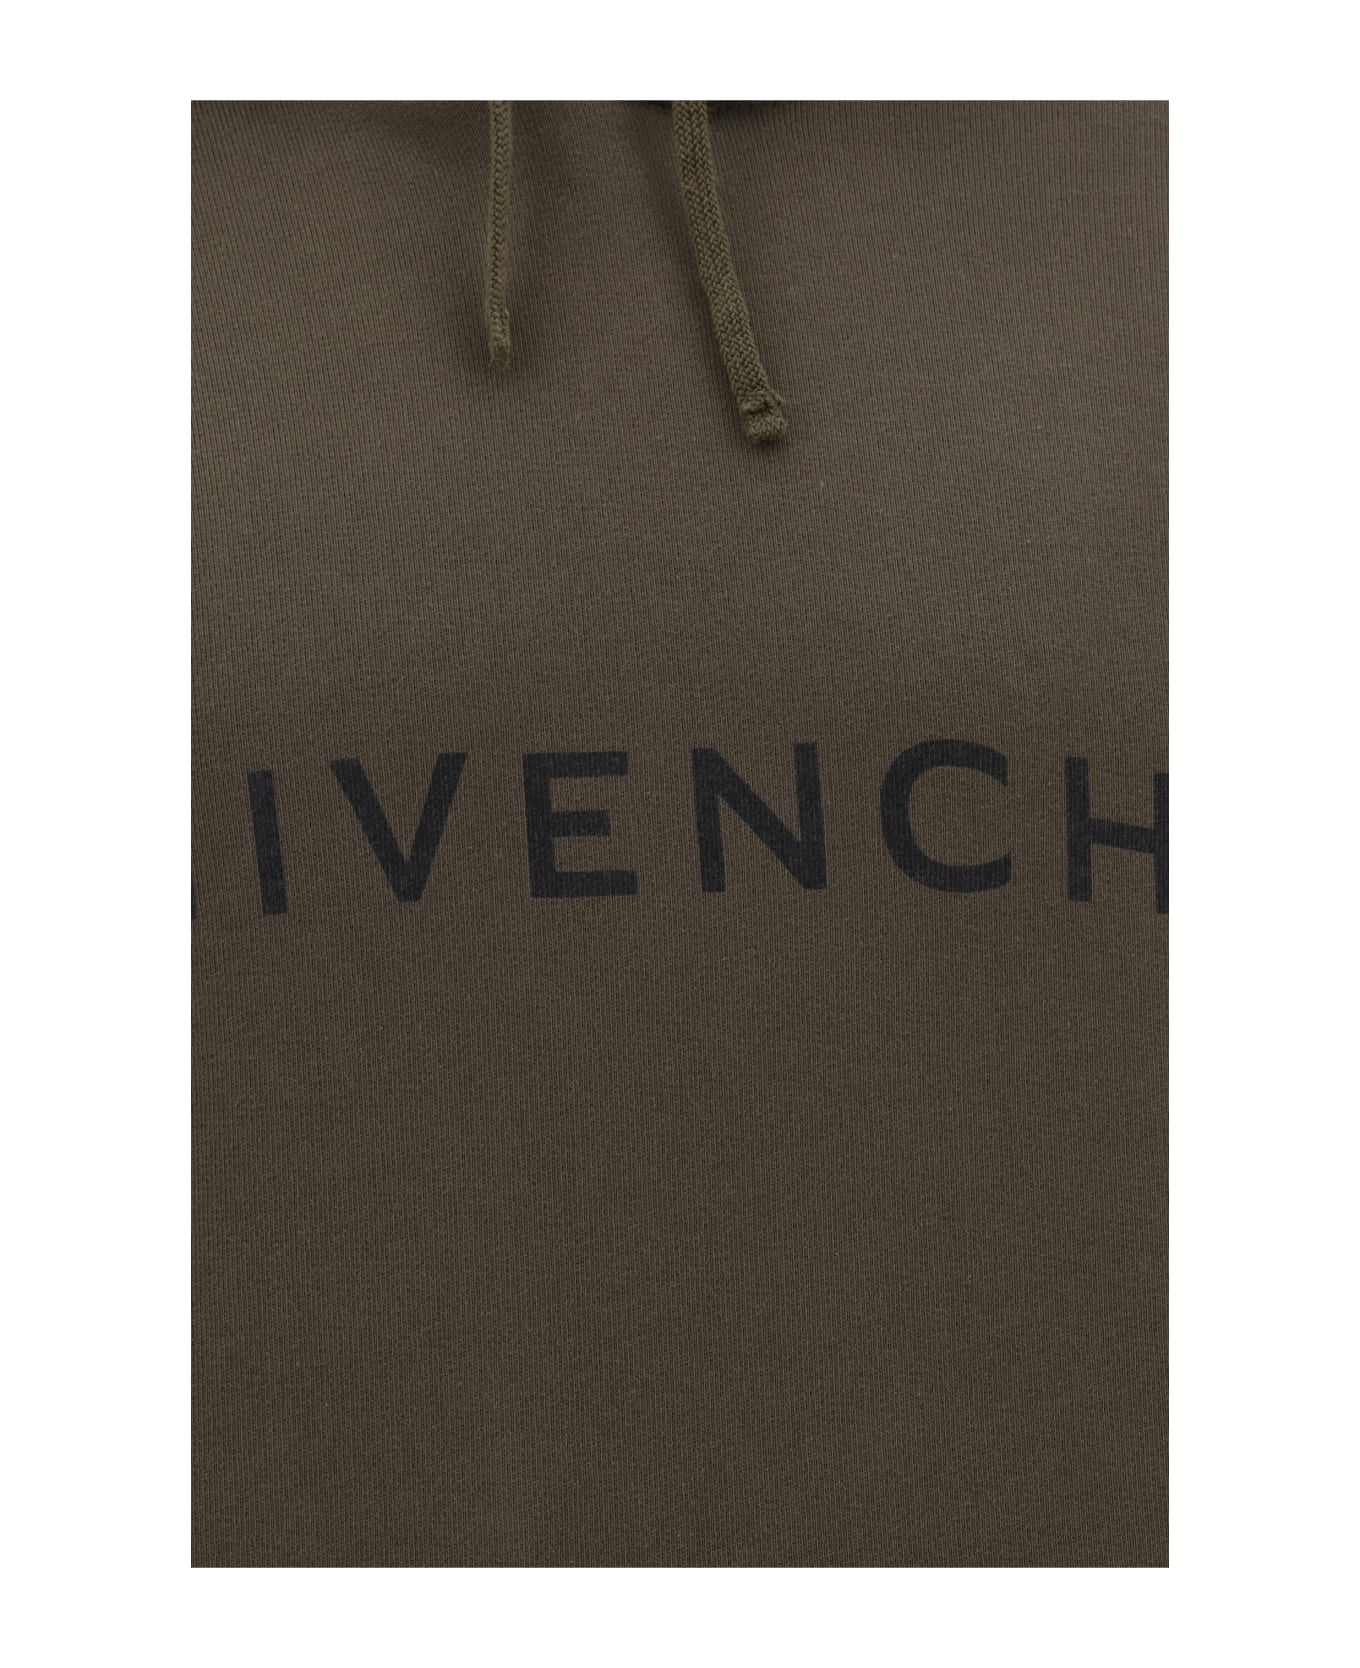 Givenchy Tigerie - Khaki